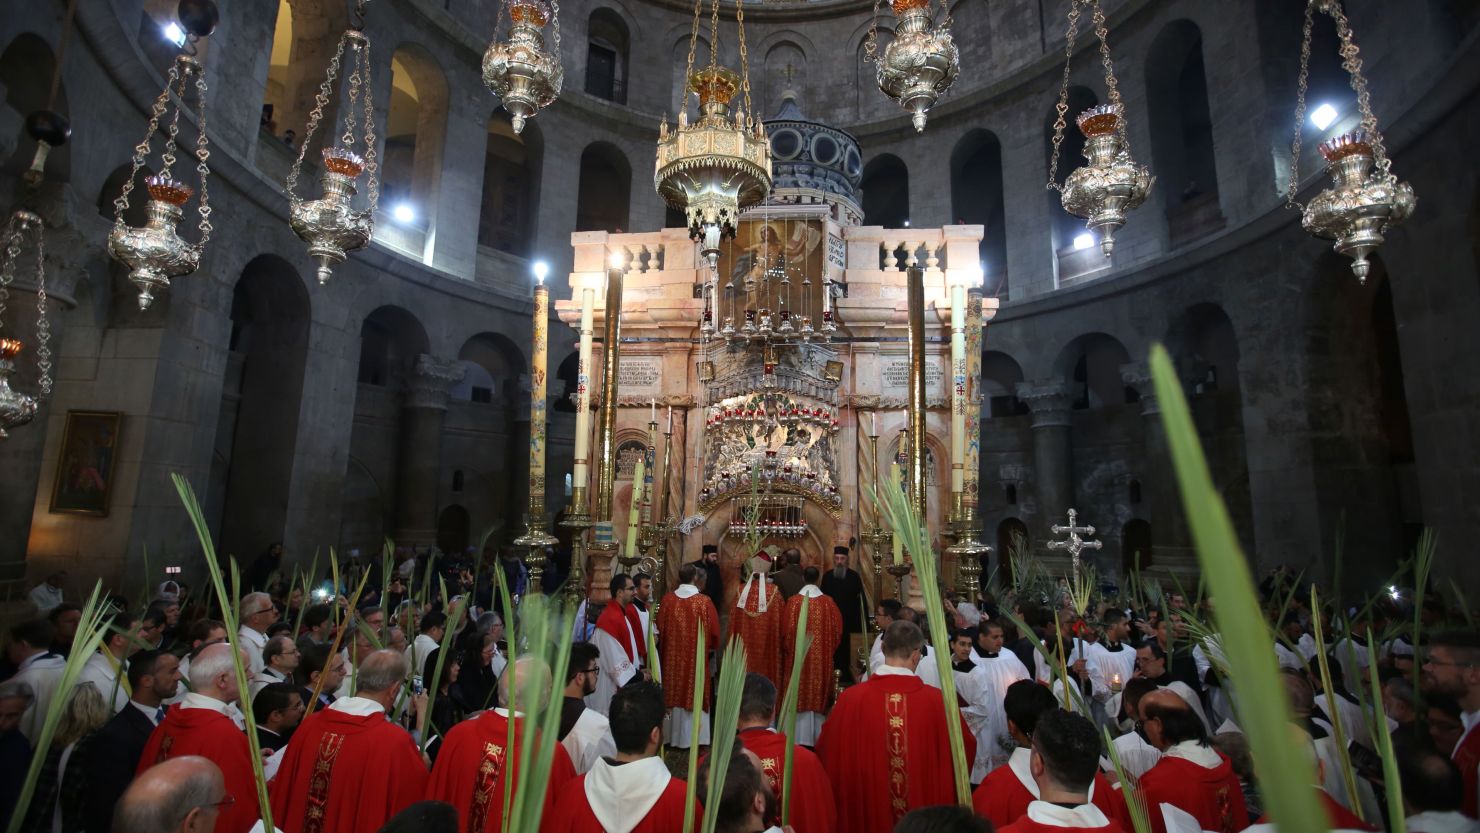 What do Christians celebrate on Palm Sunday?